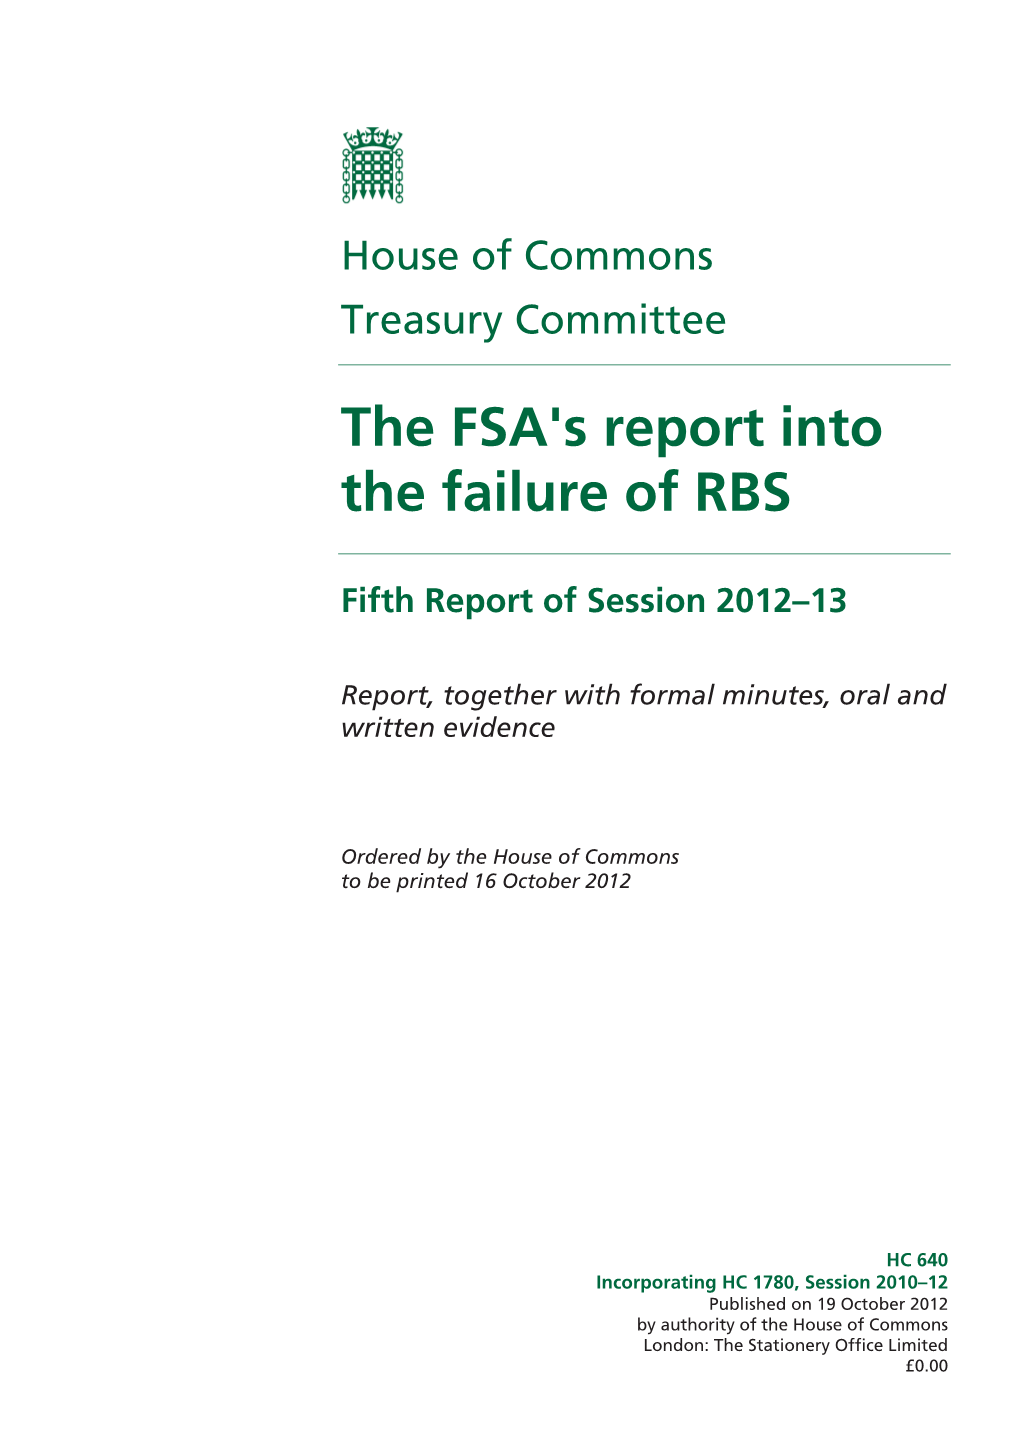 The FSA's Report Into the Failure of RBS